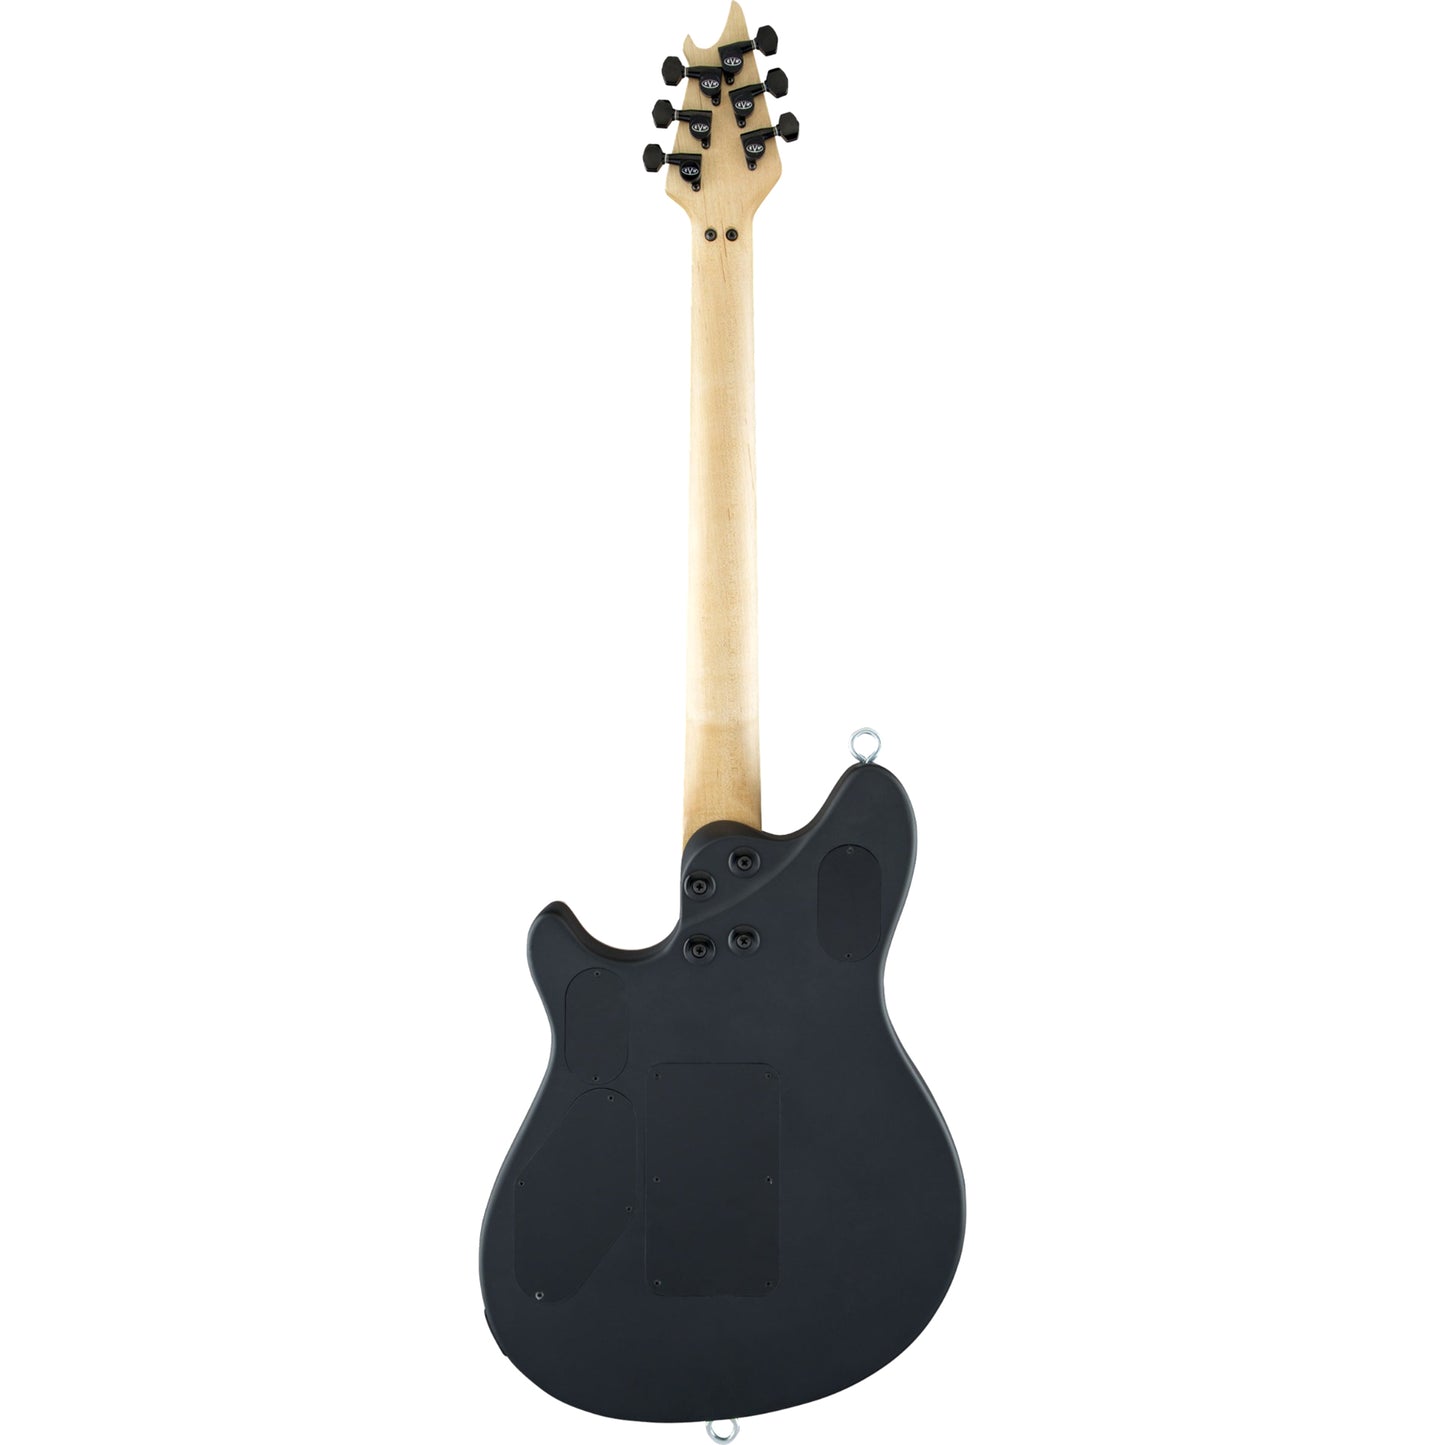 EVH Wolfgang® USA Signature Electric Guitar - Stealth Black